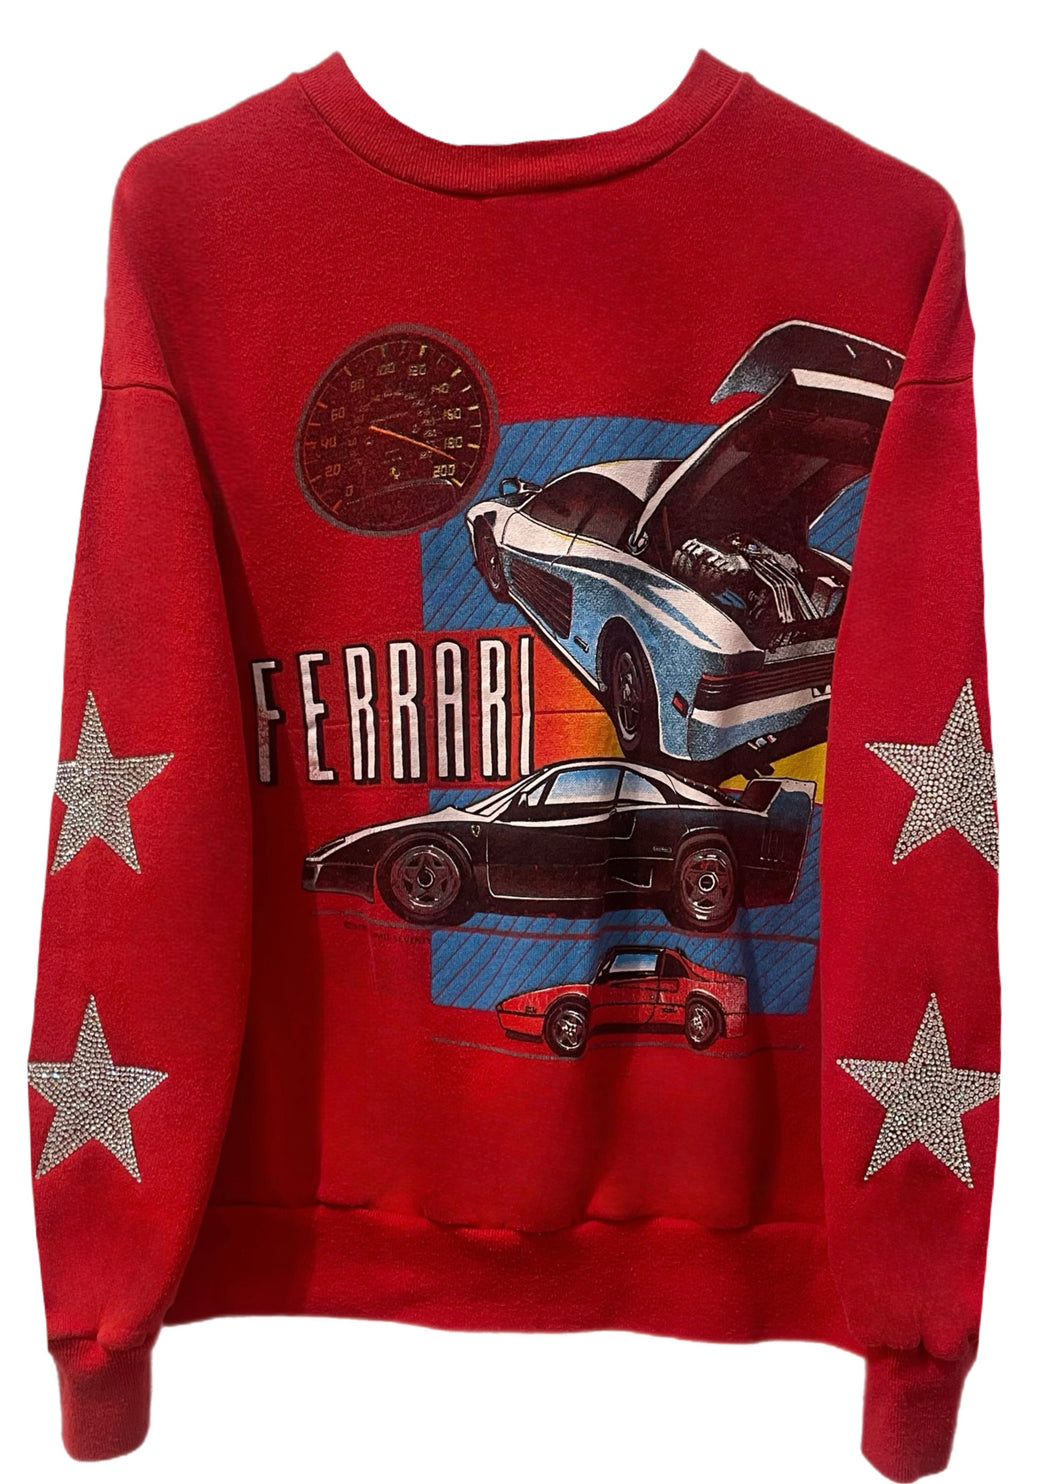 Ferrari 1990’s, One of a KIND Vintage “Rare Find” Sweatshirt with Crystal Star Design